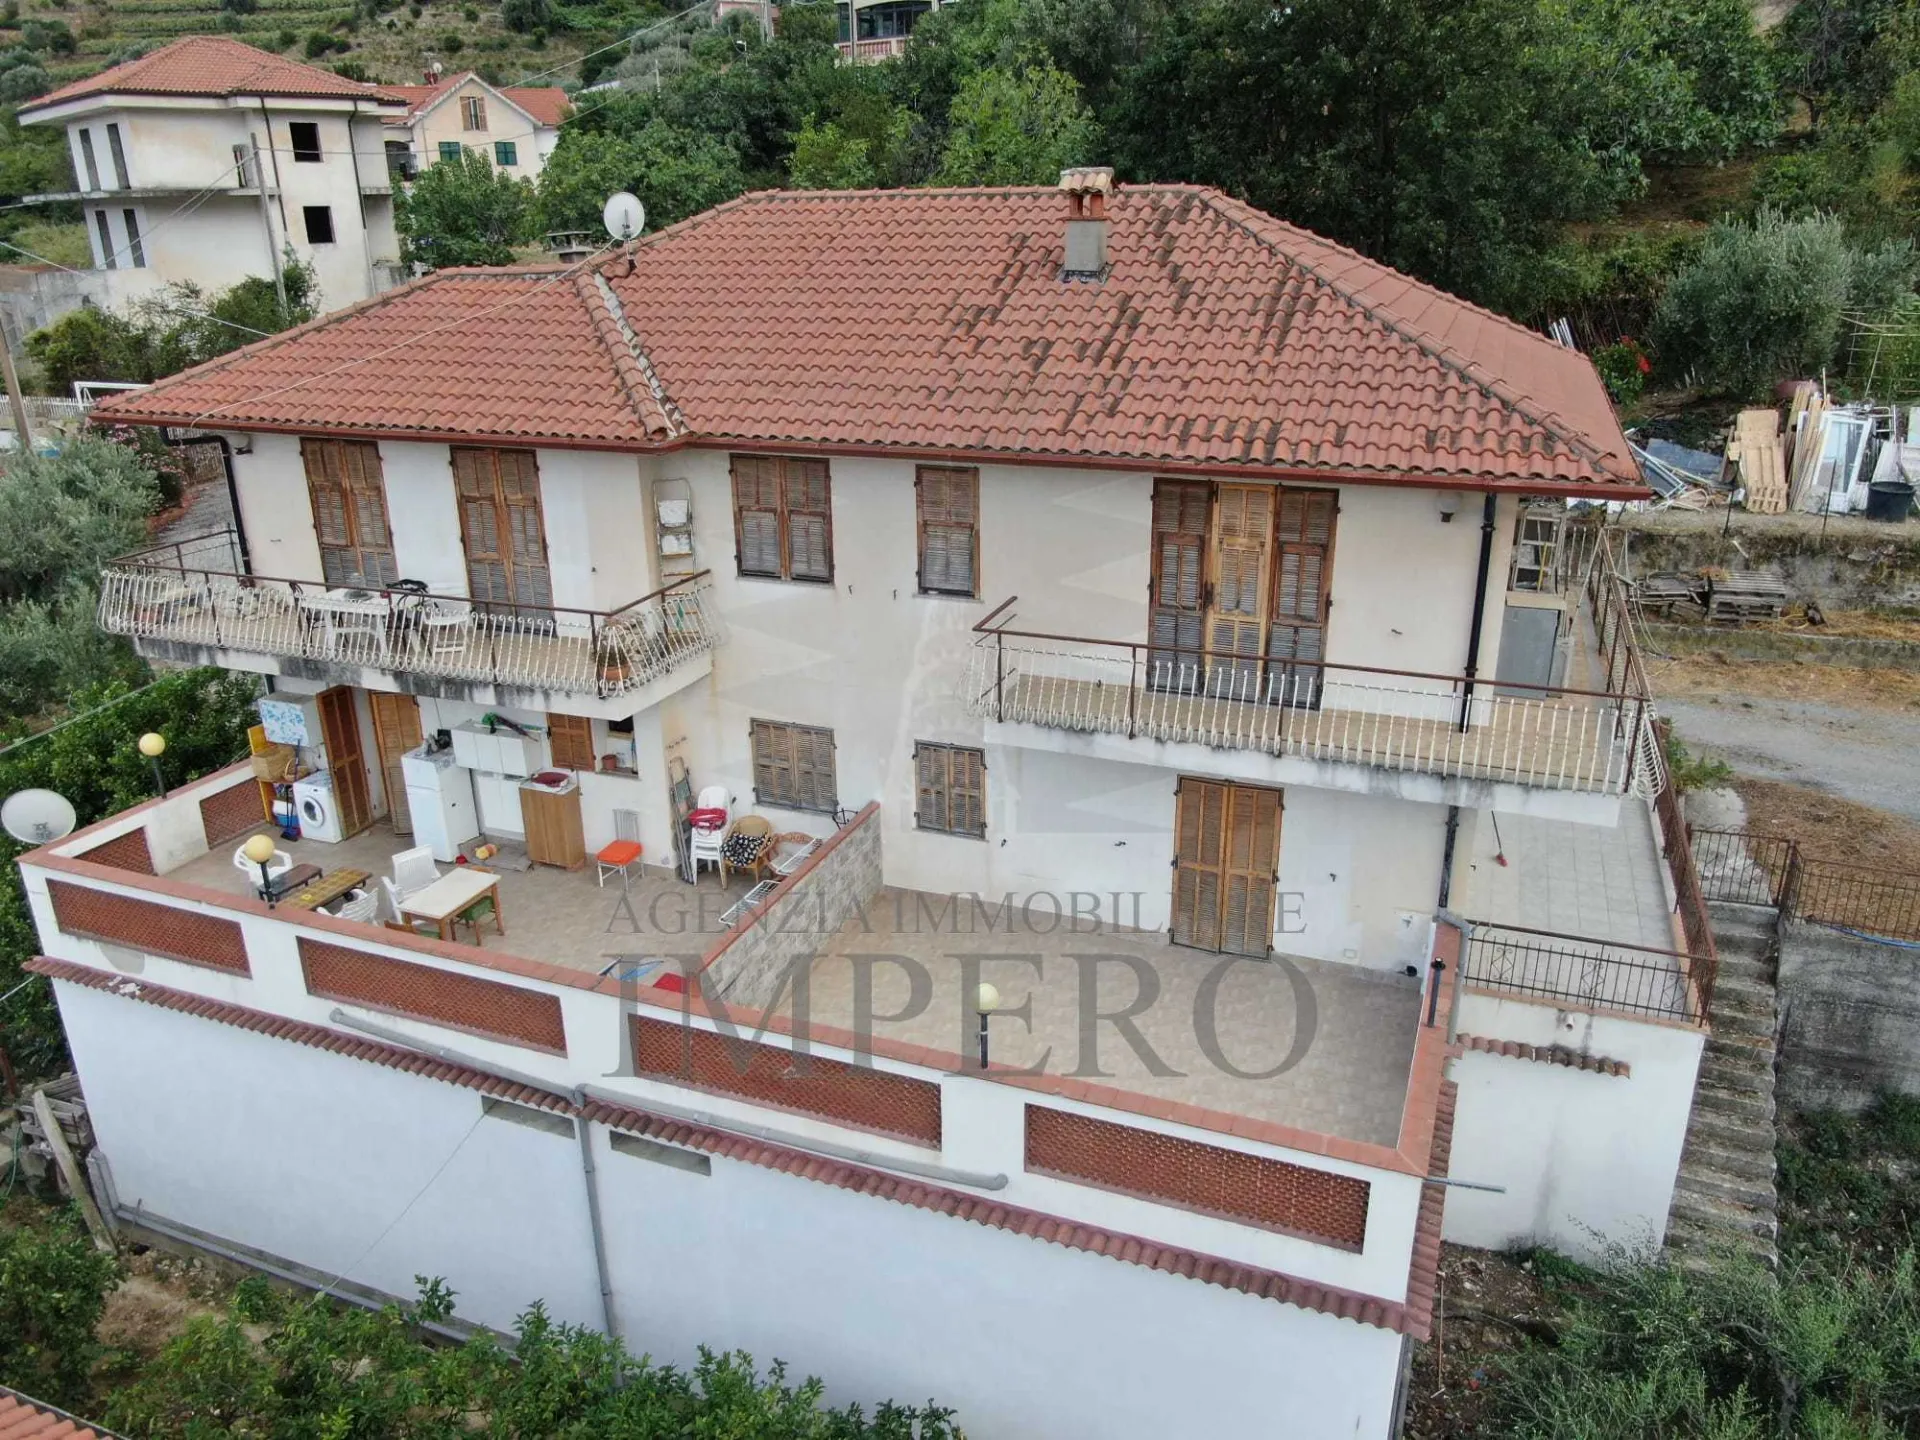 Immagine per Porzione di casa in vendita a Ventimiglia